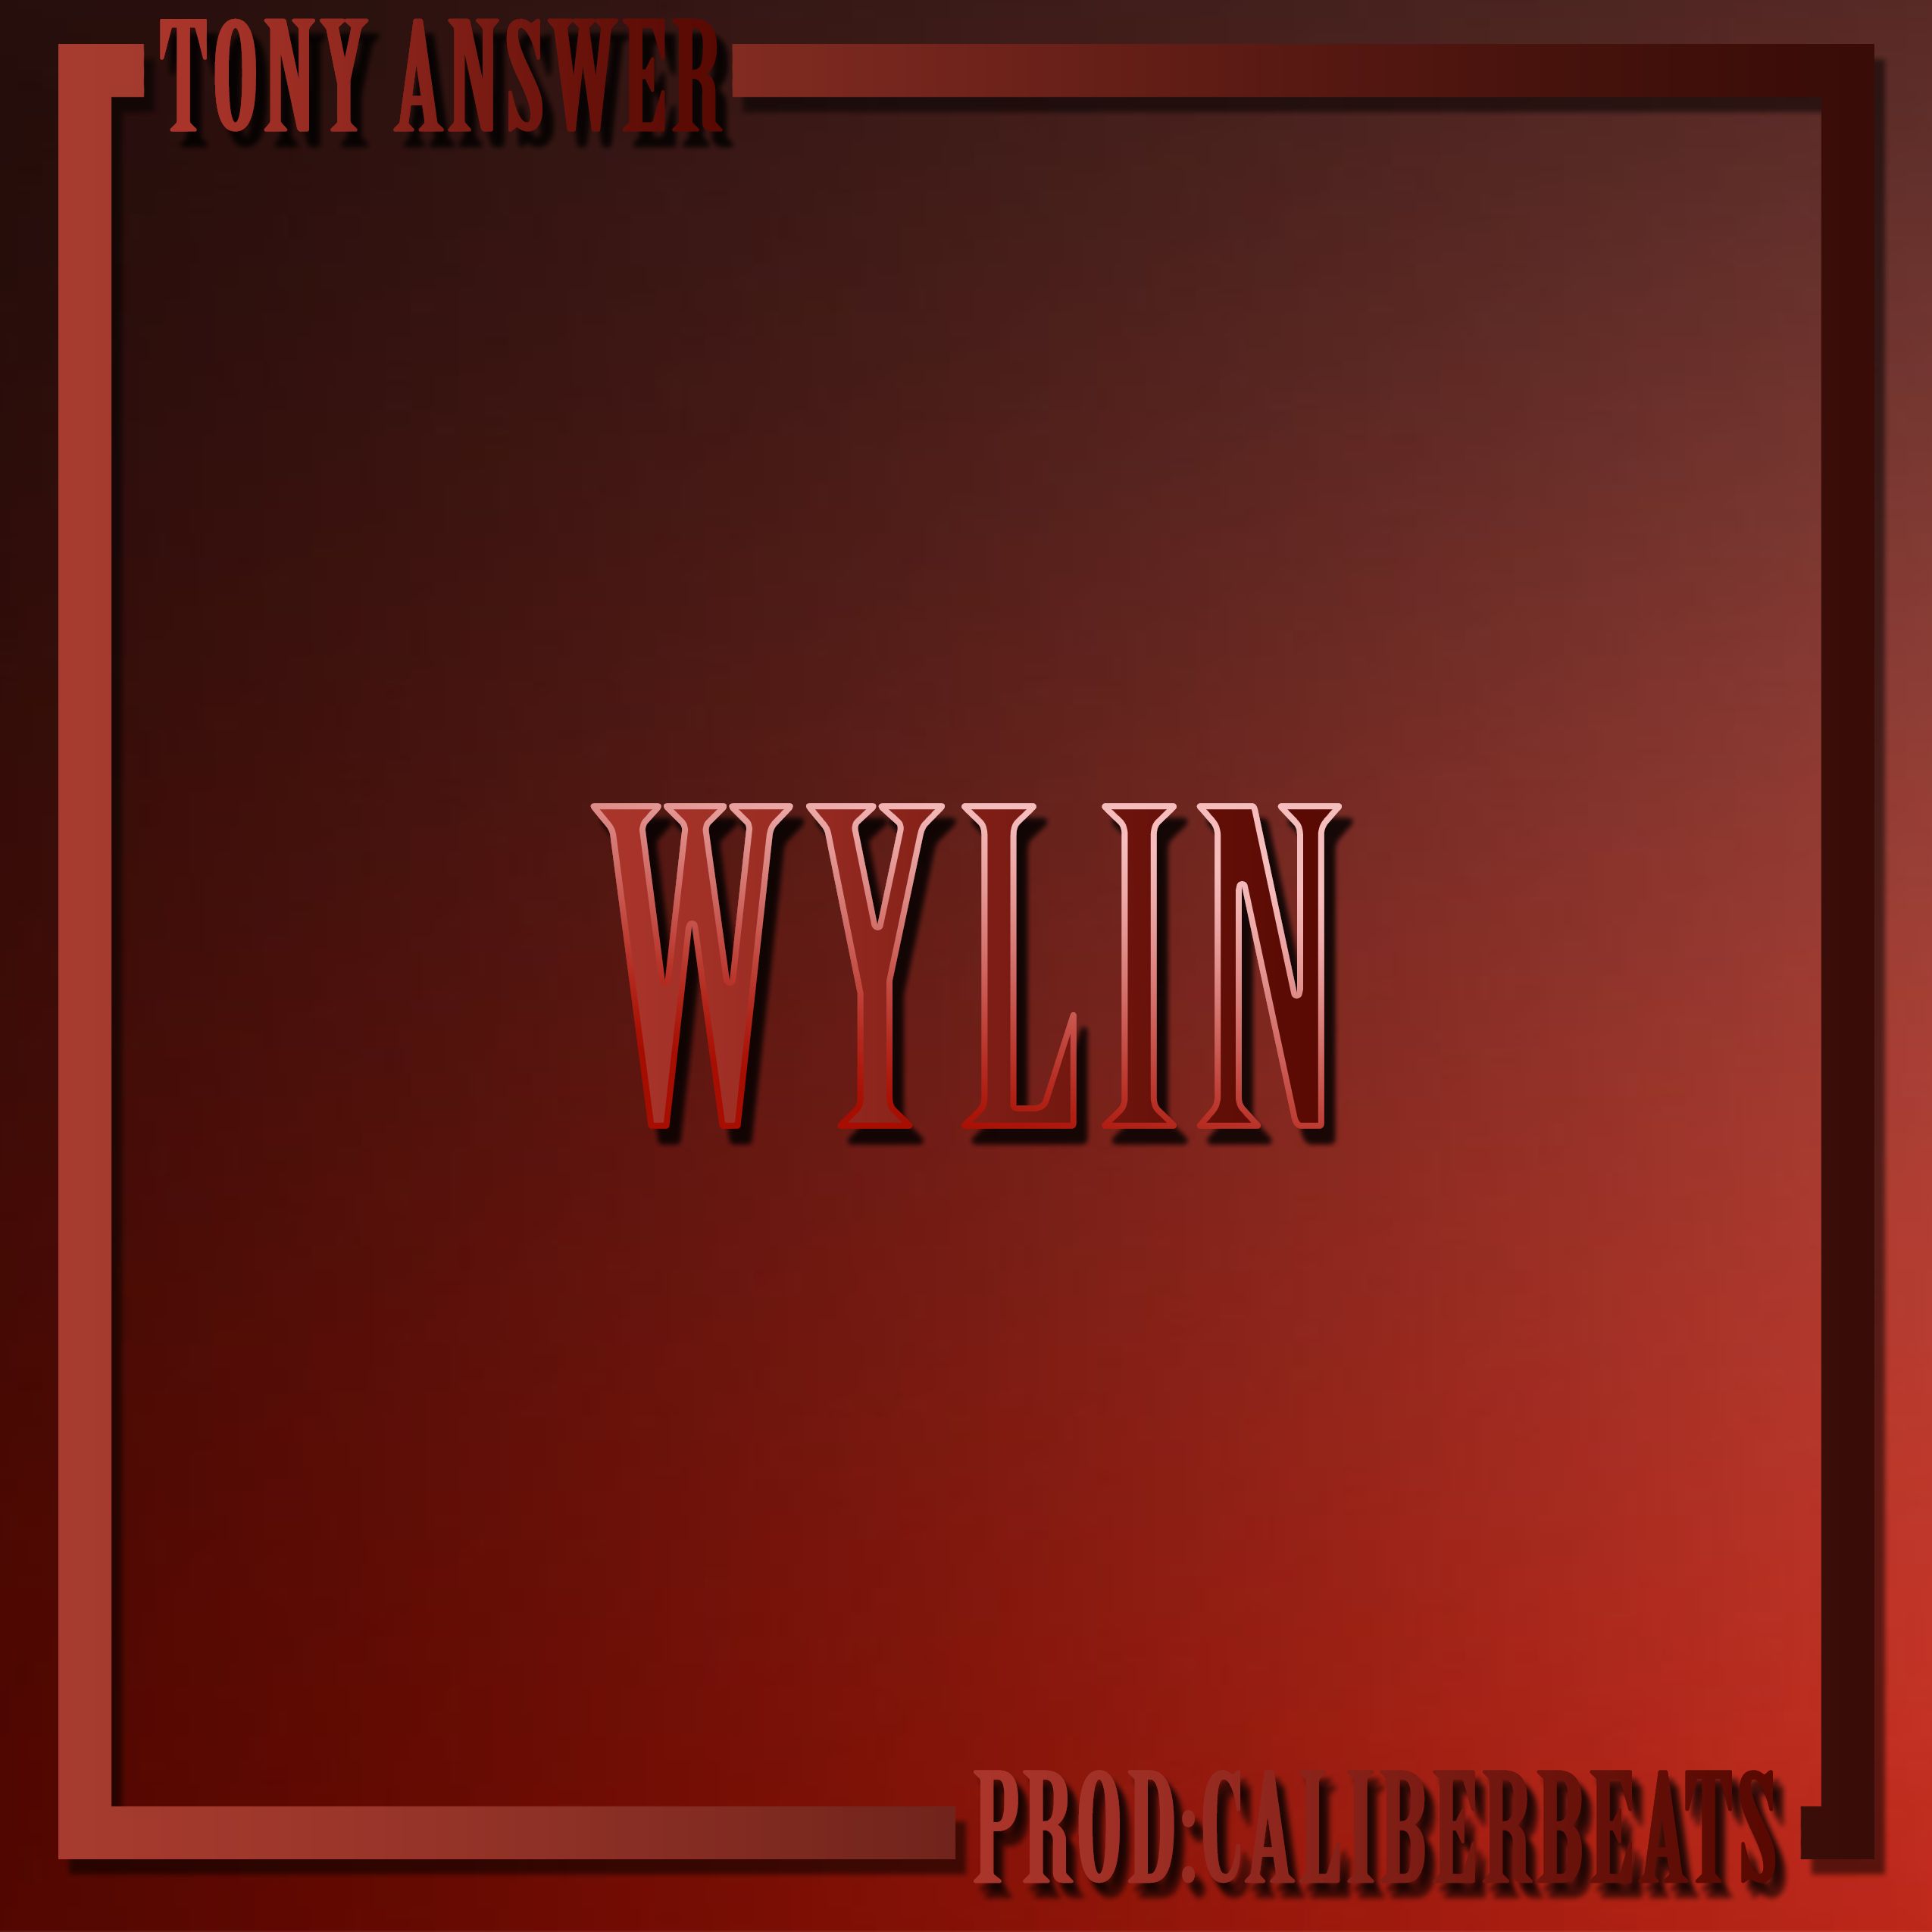 Tony Answer Goes Off On “Wylin”